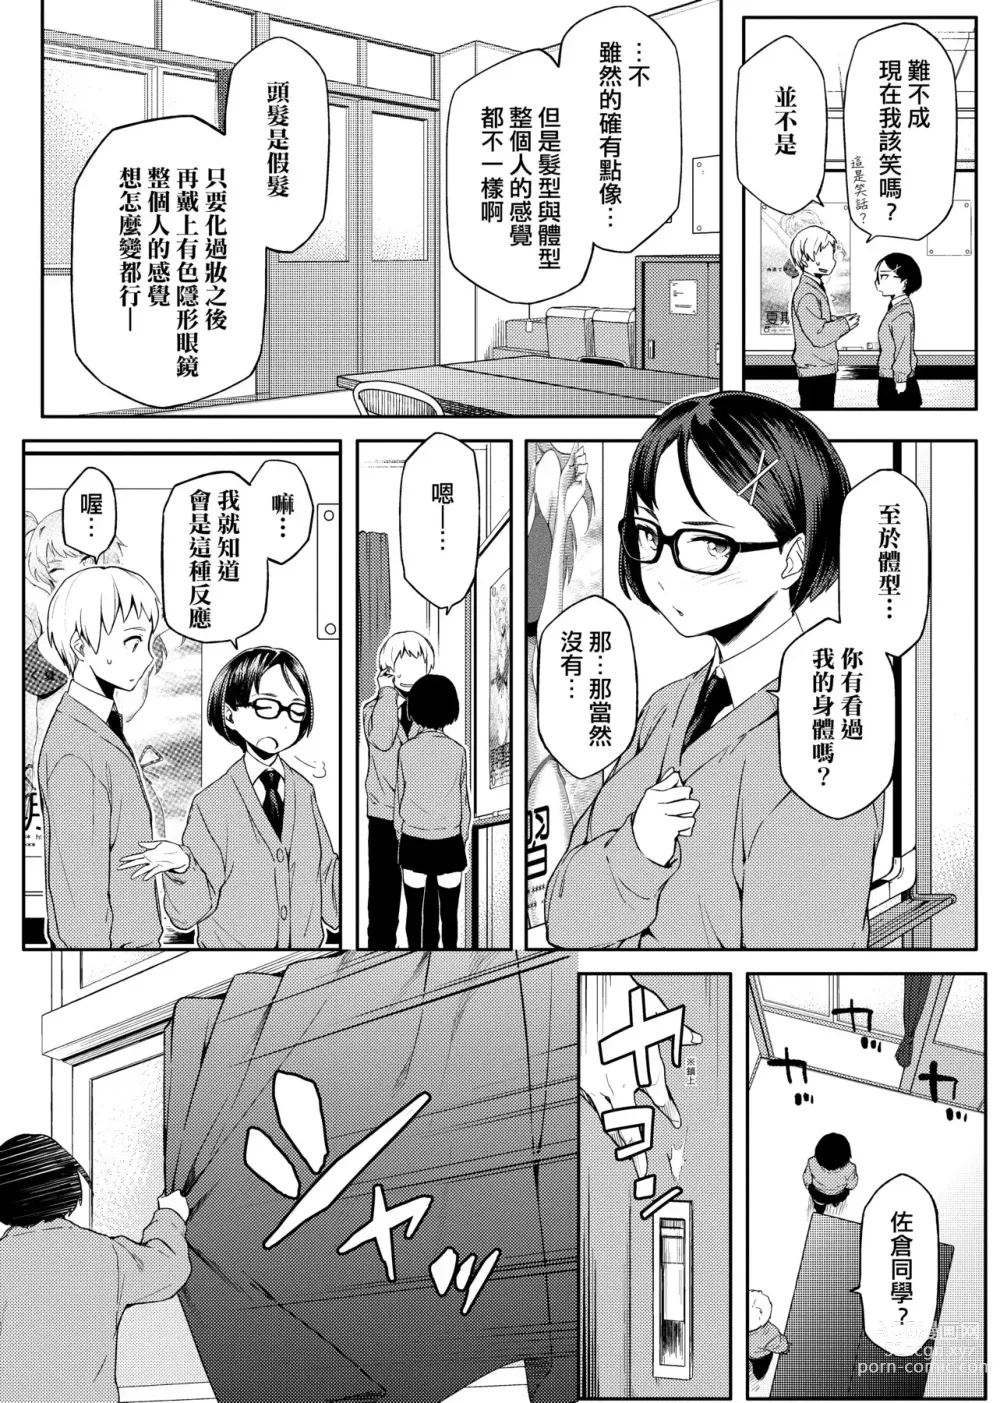 Page 217 of manga Natsu Koi Ota Girl - What Brings You to Japan?